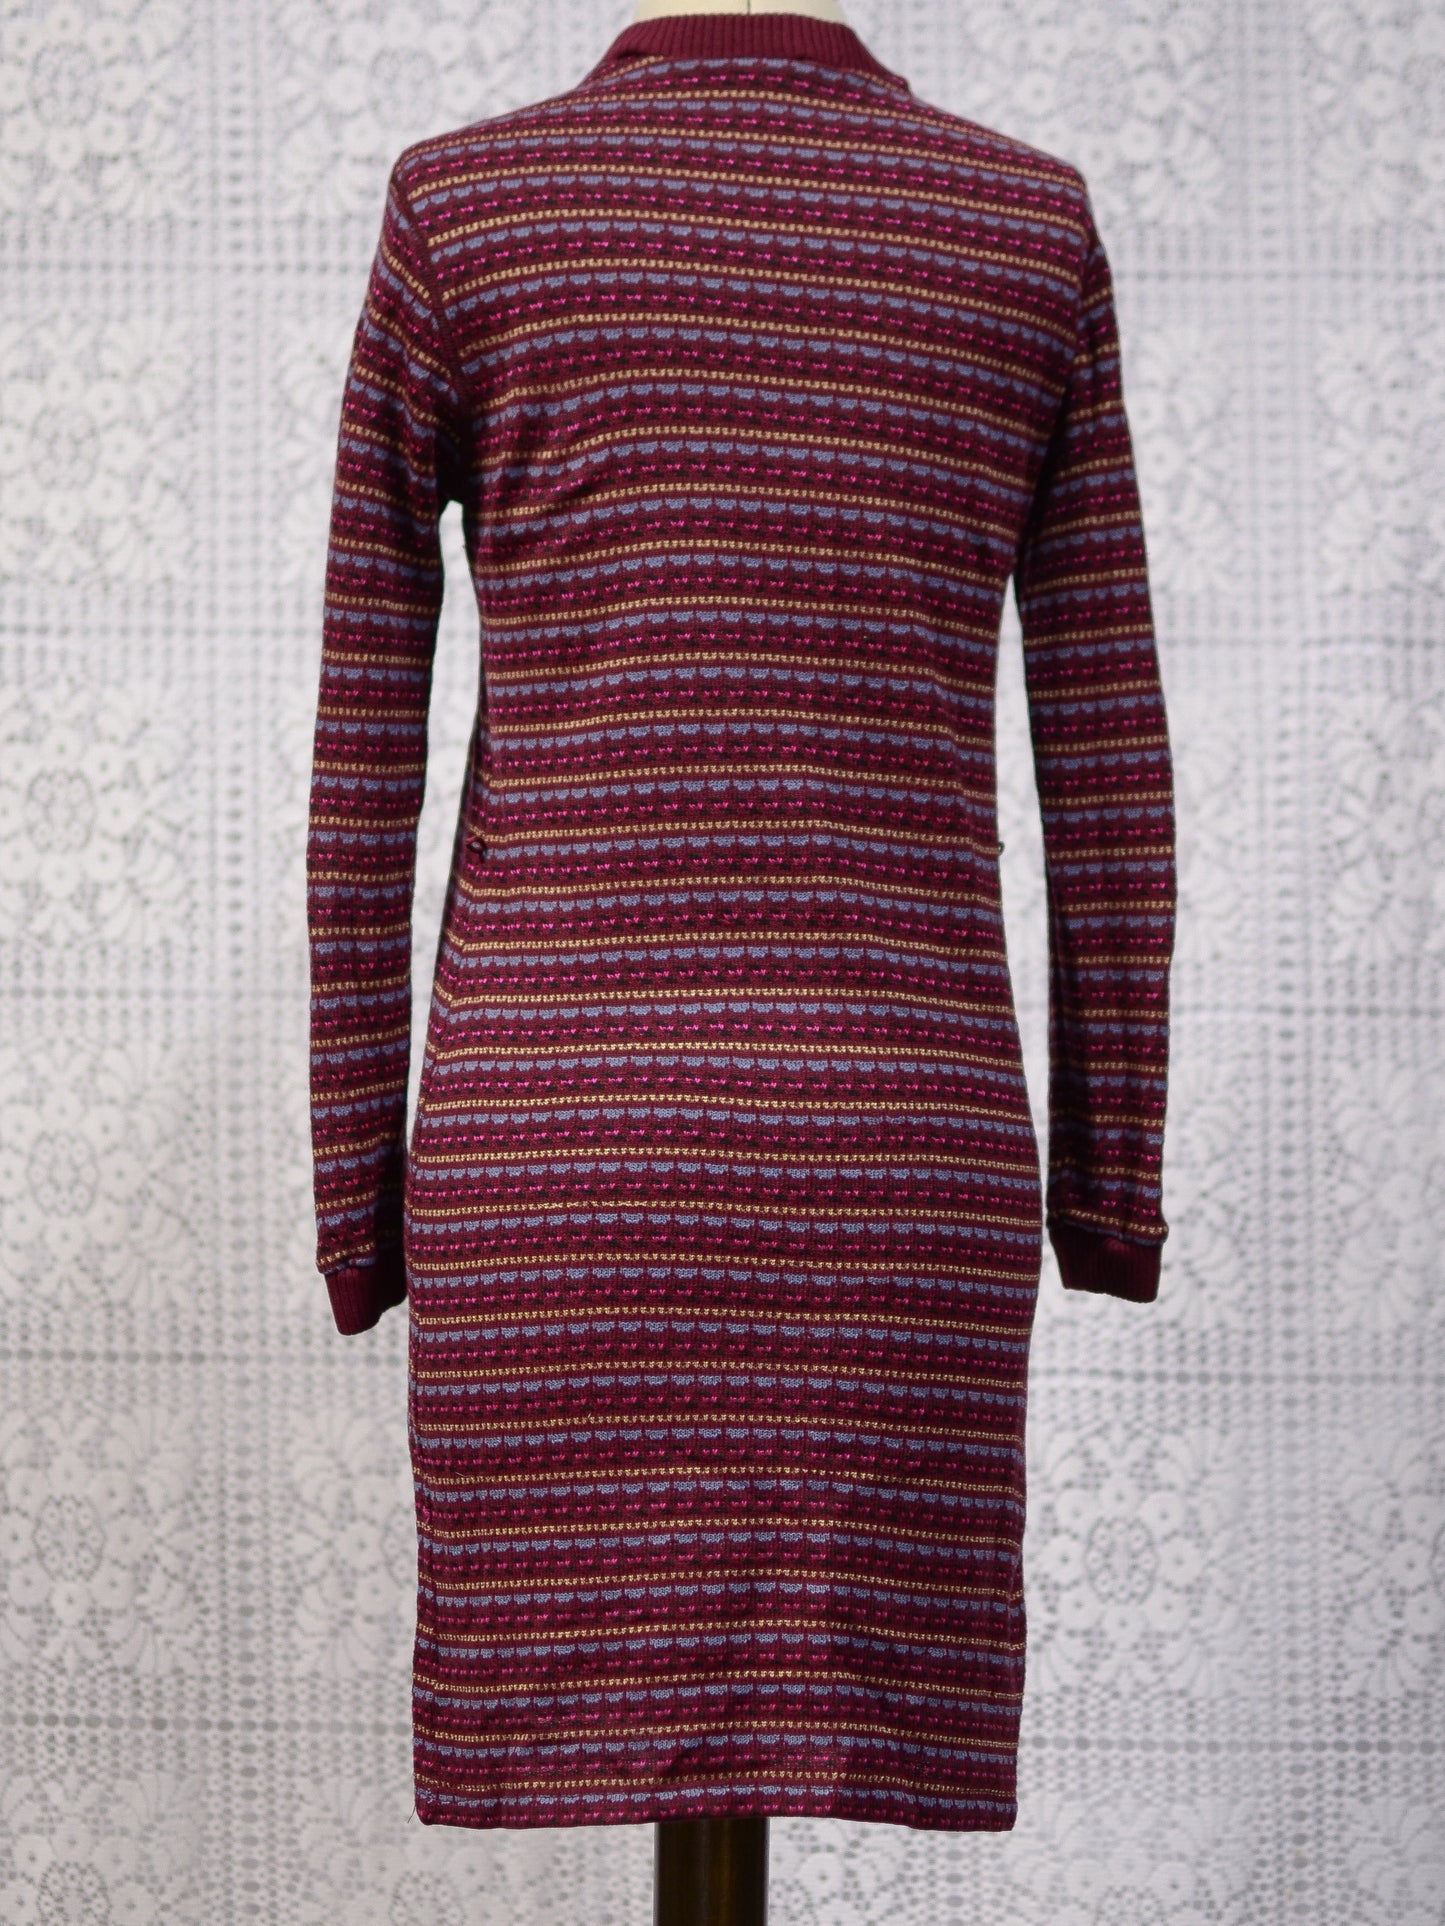 1970s St Michael dark red striped knitted jumper dress